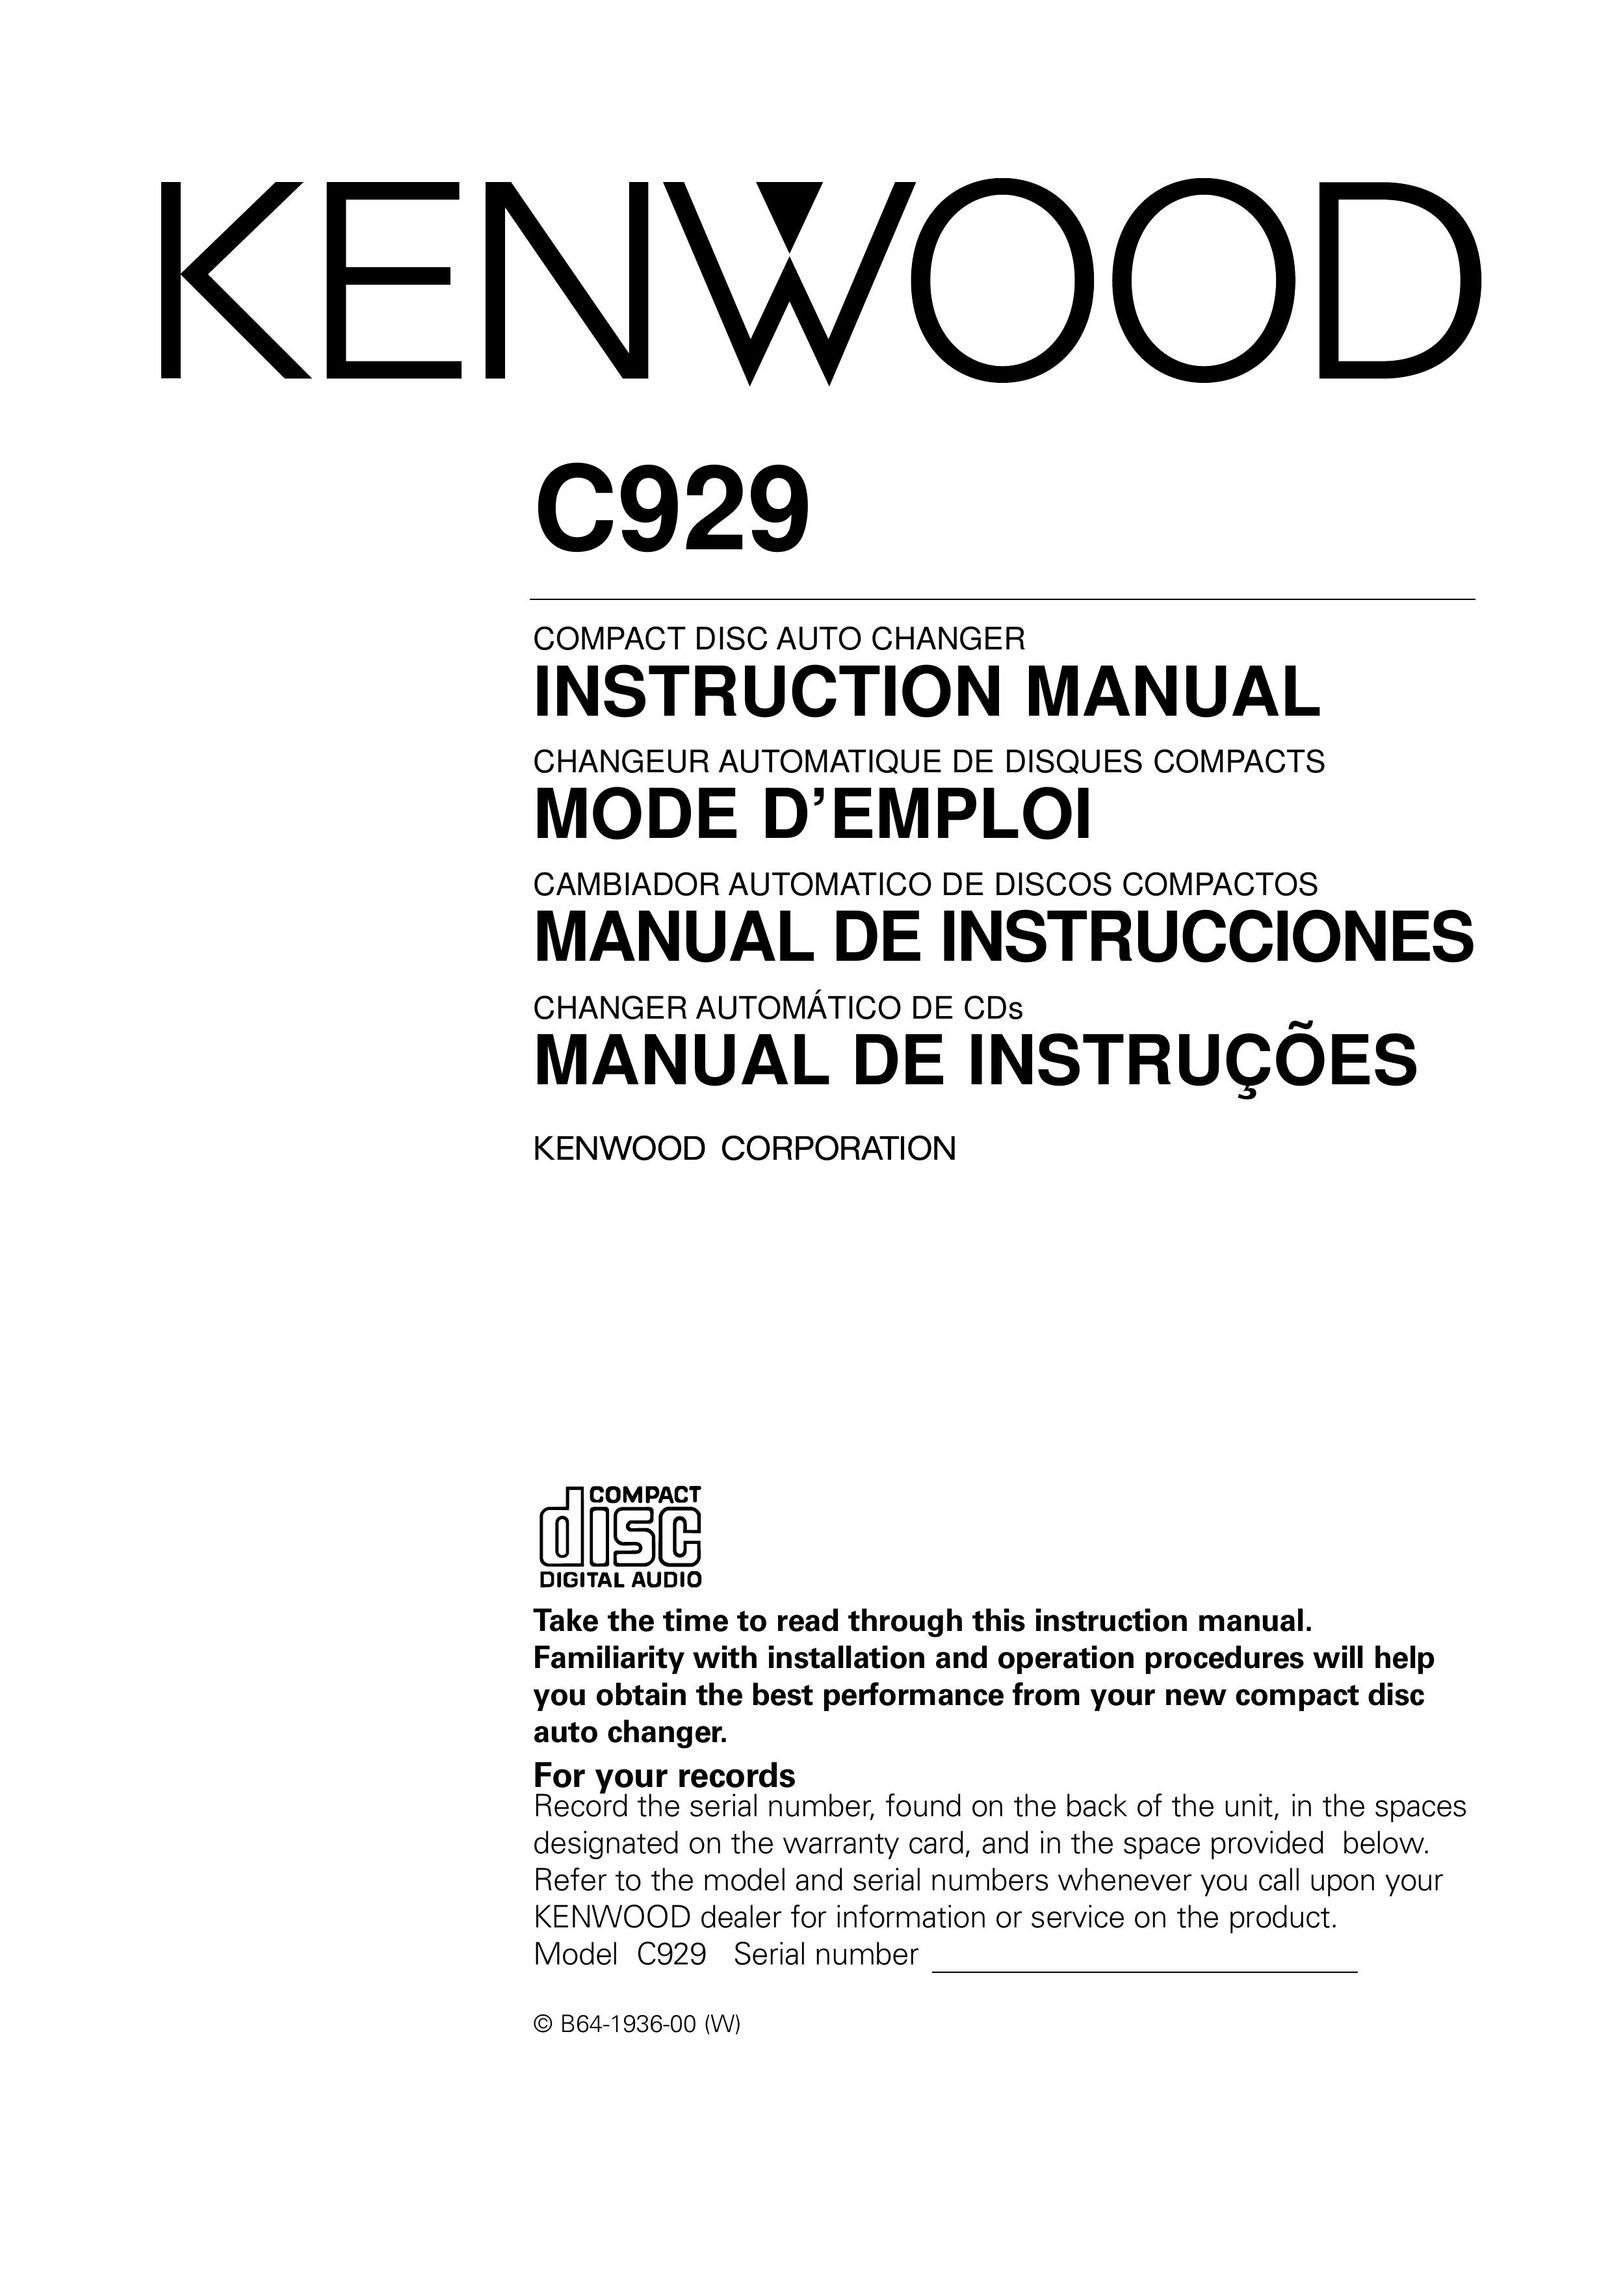 Kenwood C929 CD Player User Manual